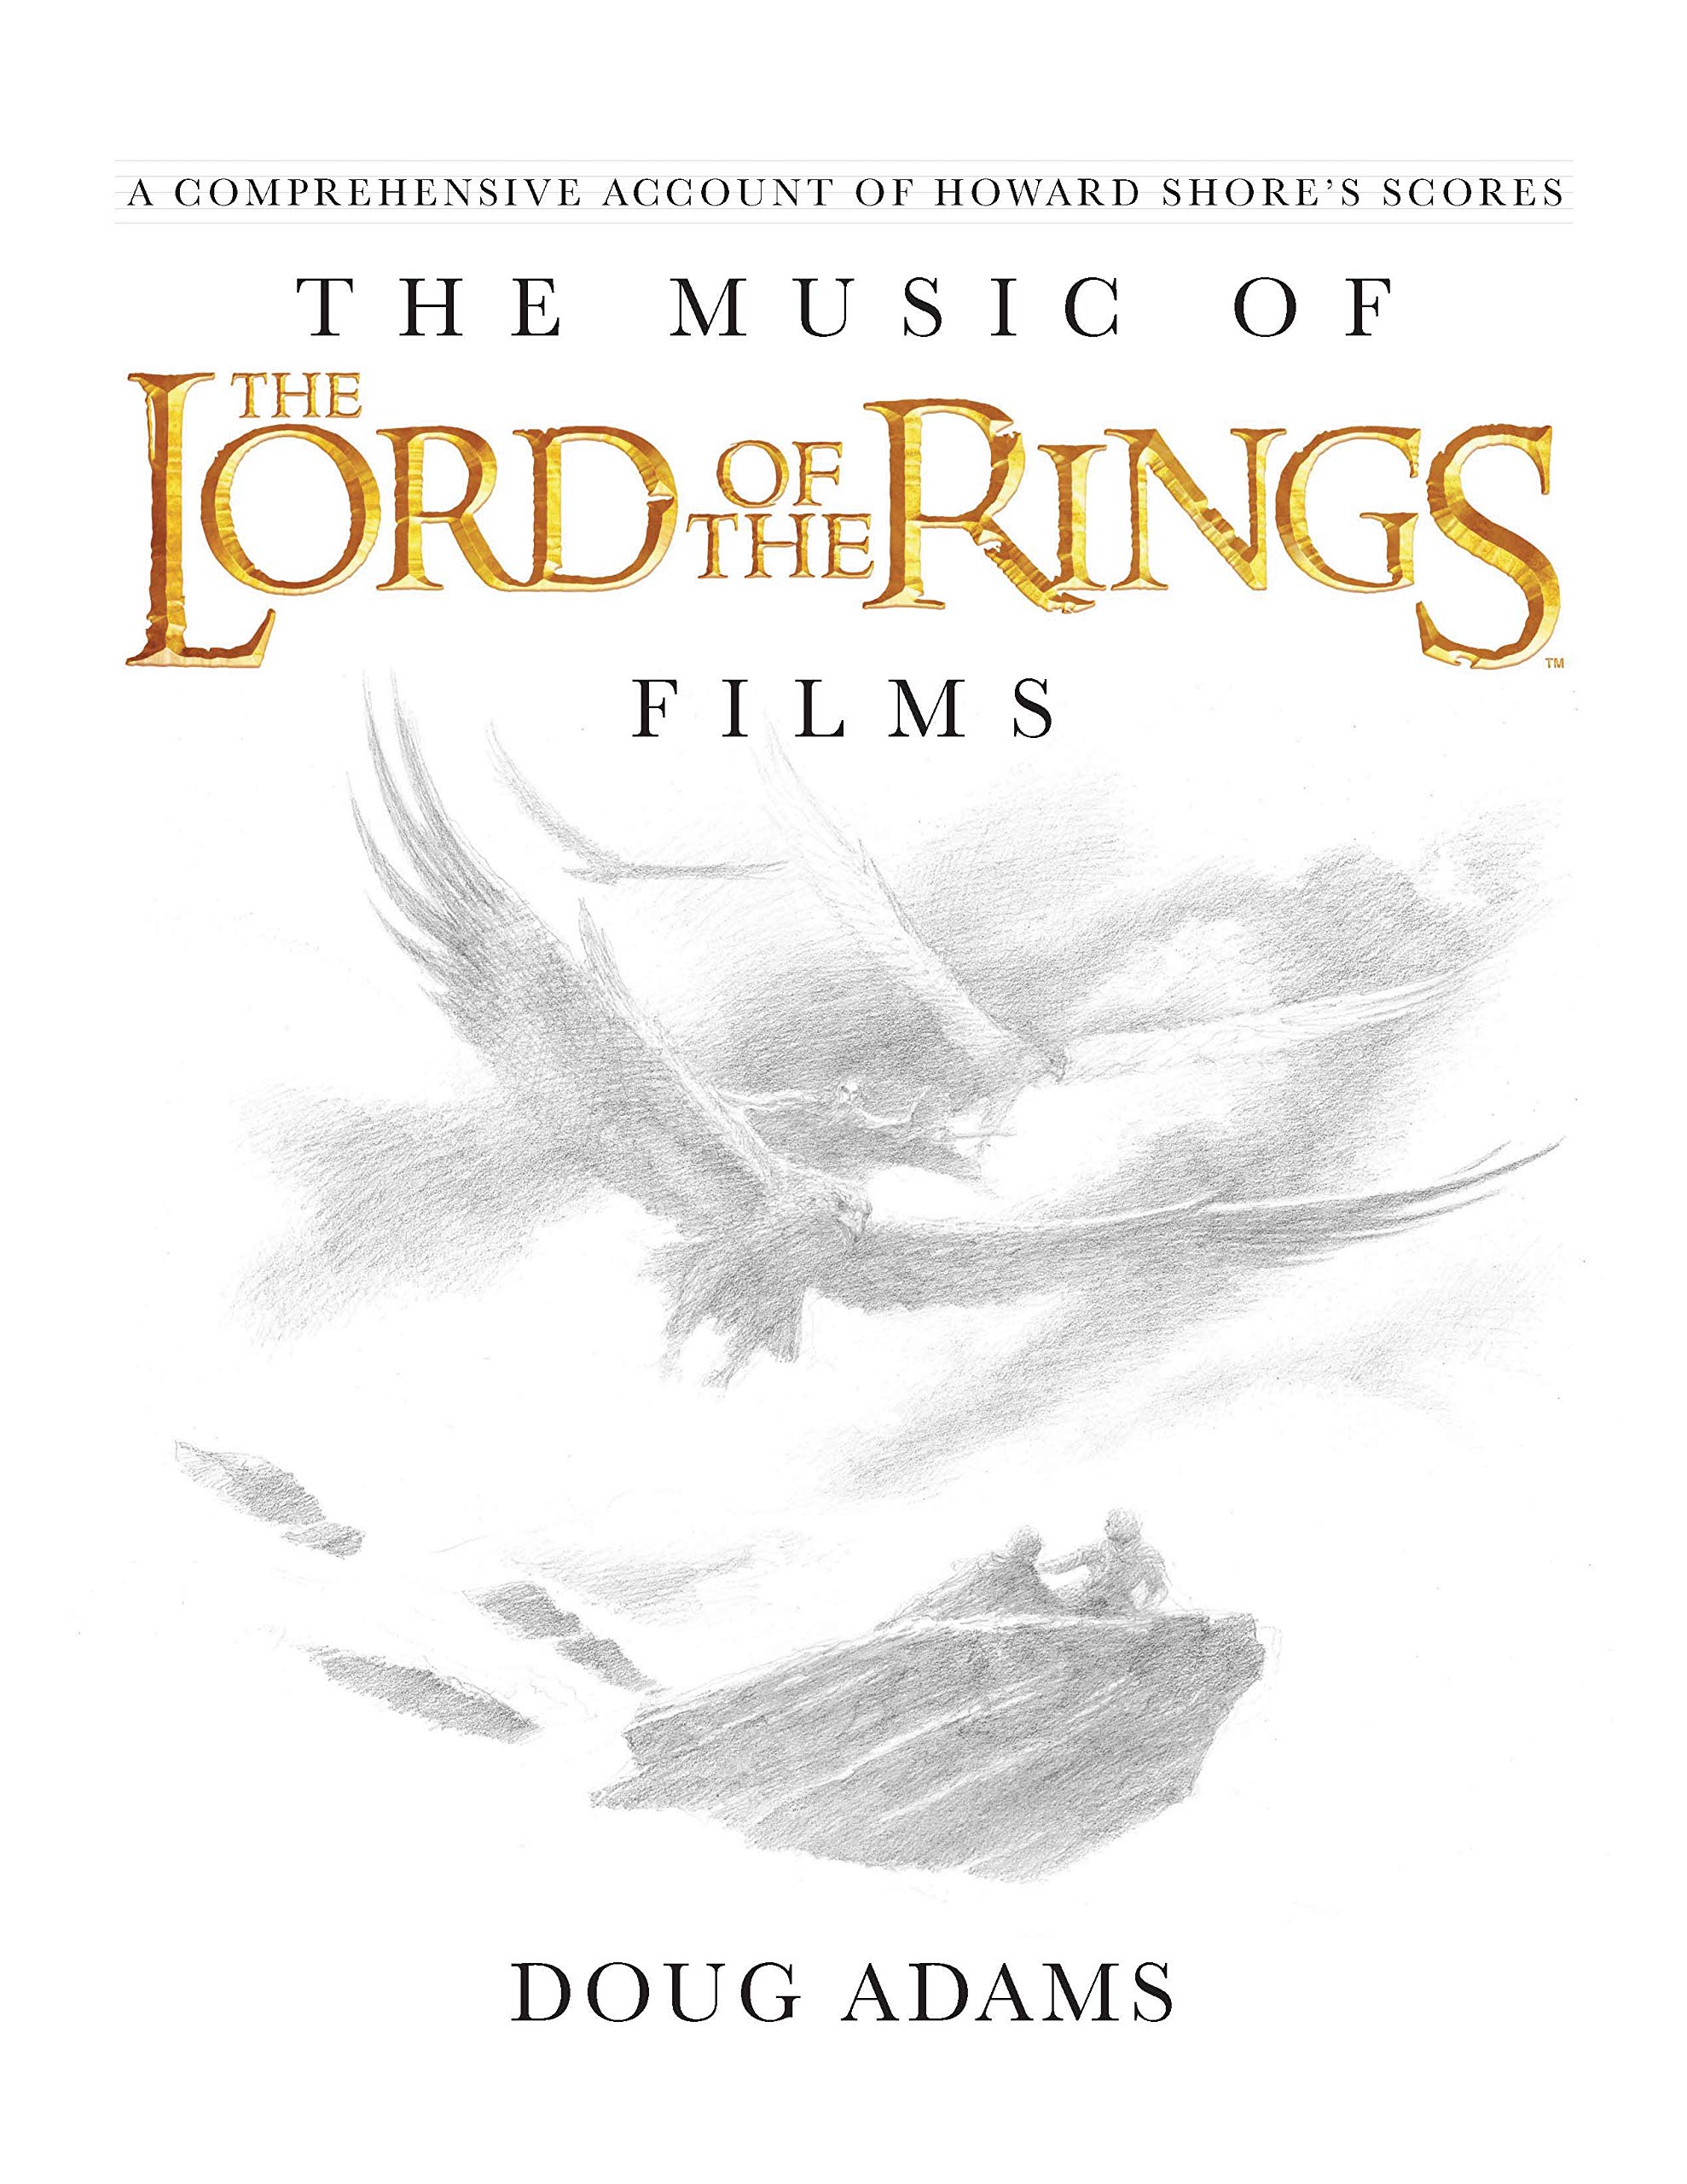 指环王三部曲乐谱+CD 收藏版 魔戒 英文原版 The Music of the Lord of the Rings Films: Howard Shore's Scores